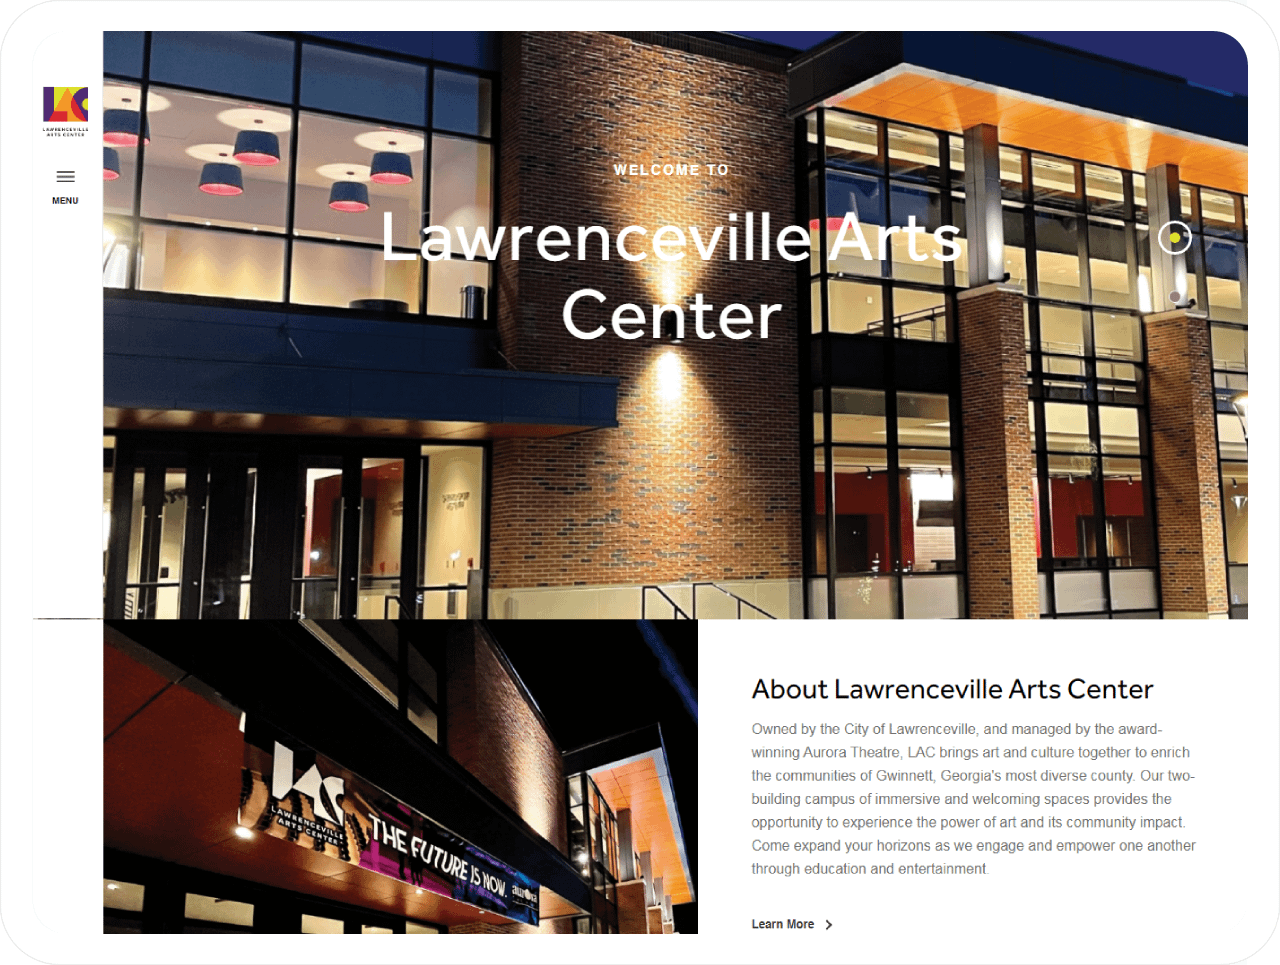 Lawrenceville Arts Center